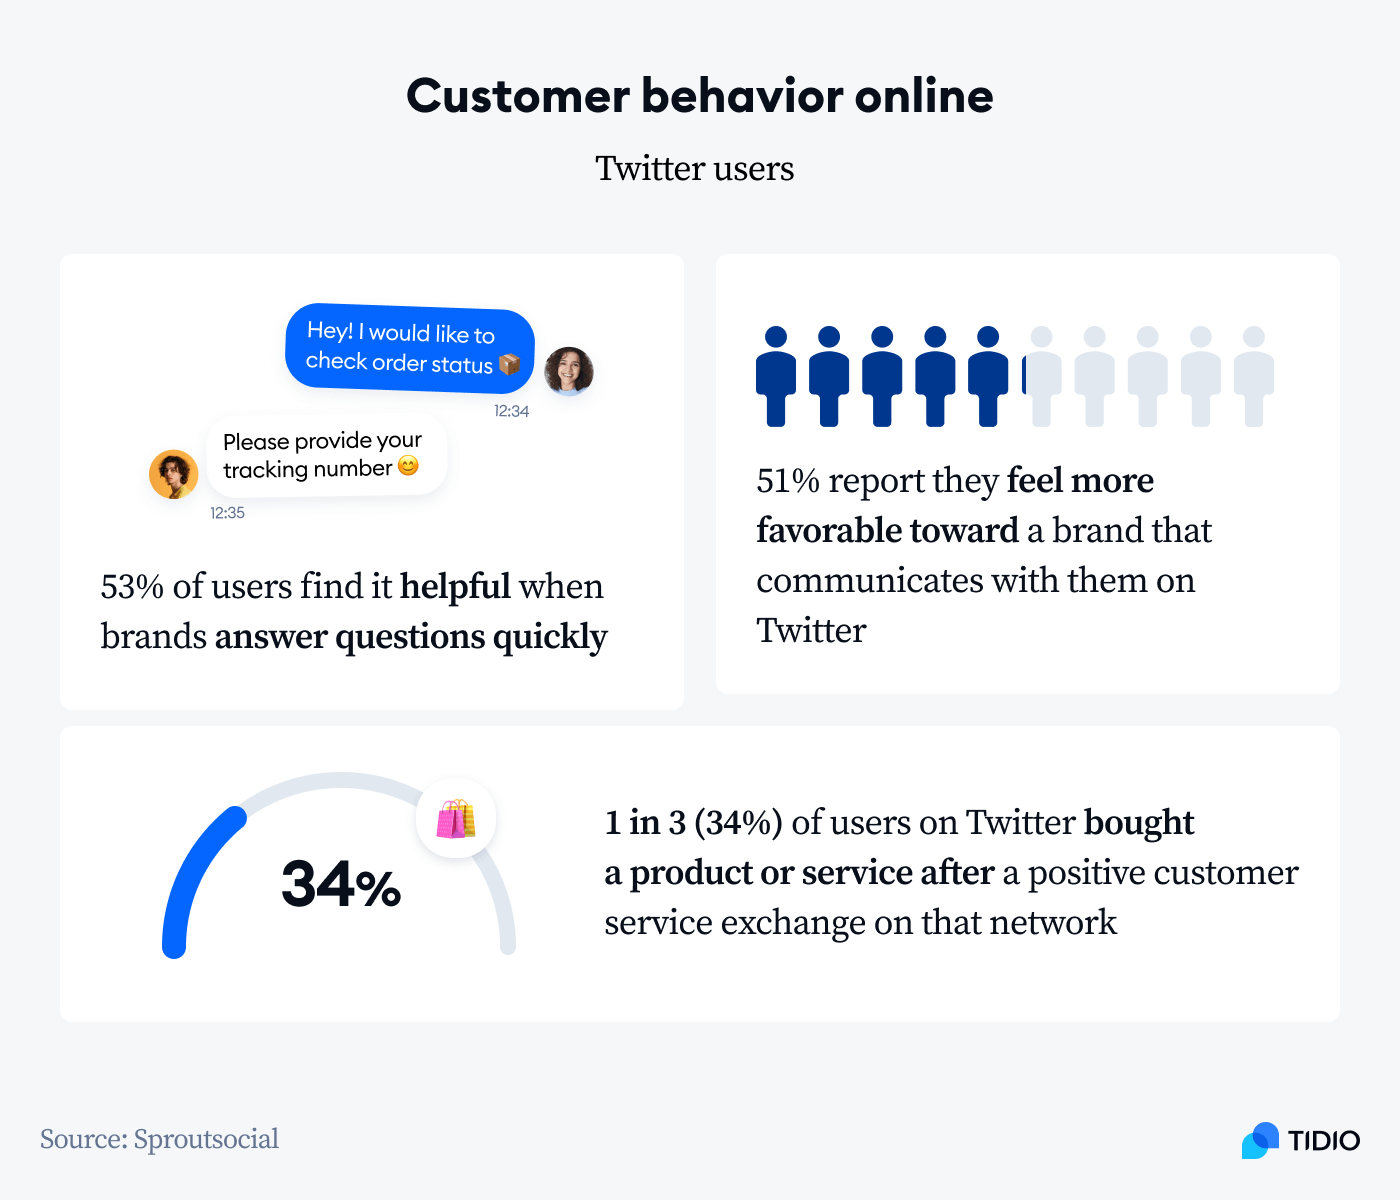 customer behavior online image